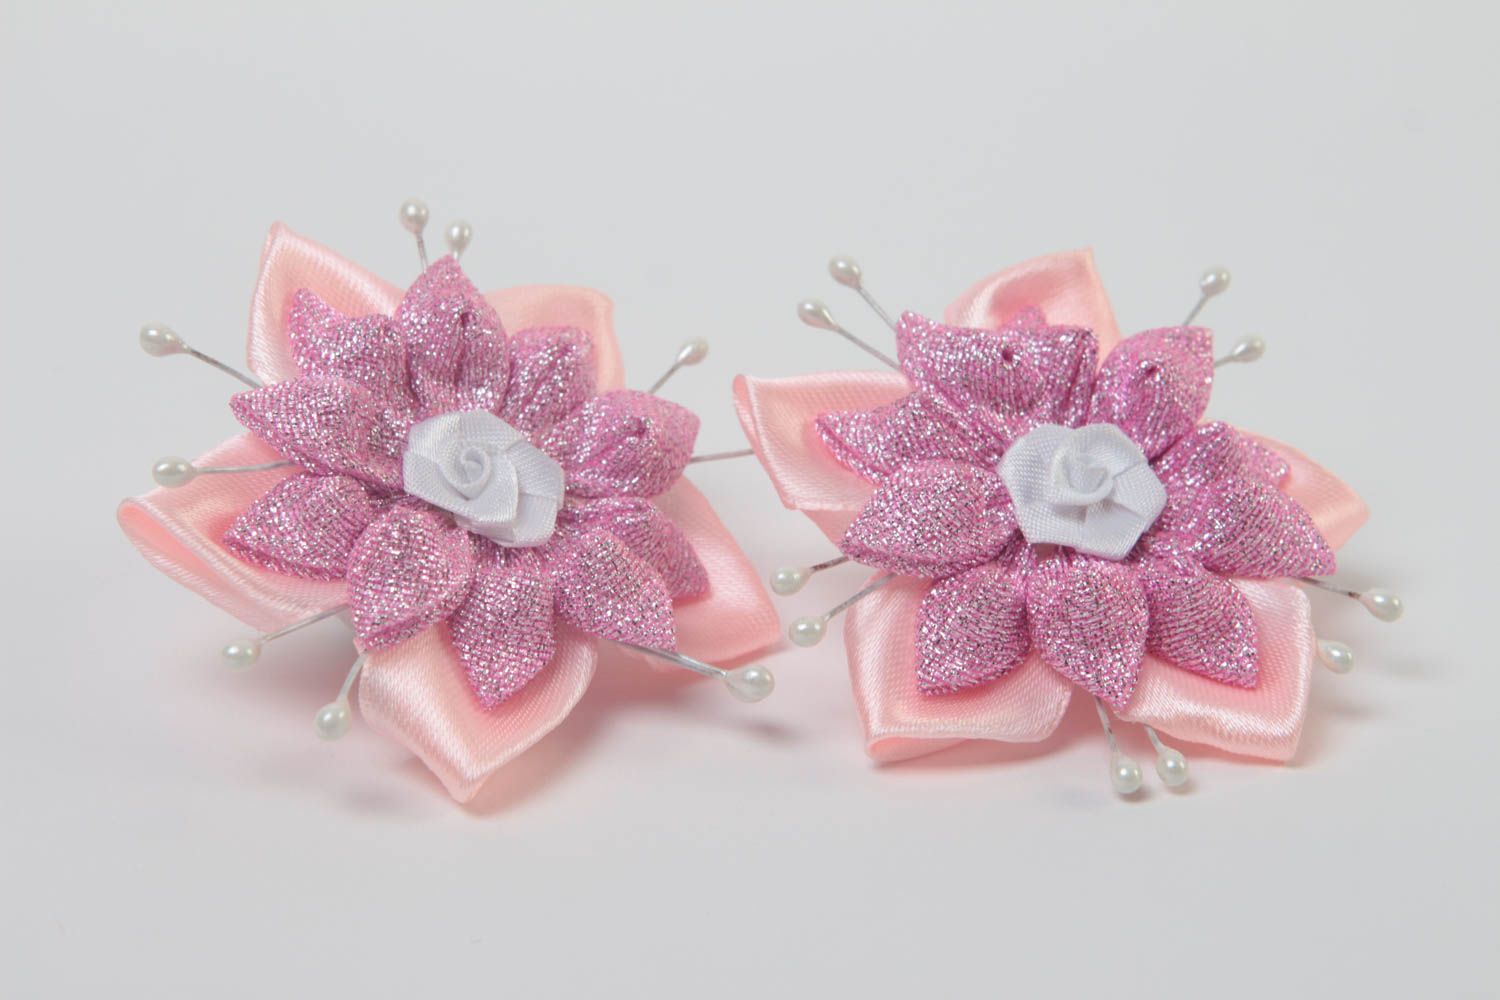 Handmade hair accessories hair ties flower hair accessories gifts for girls photo 3